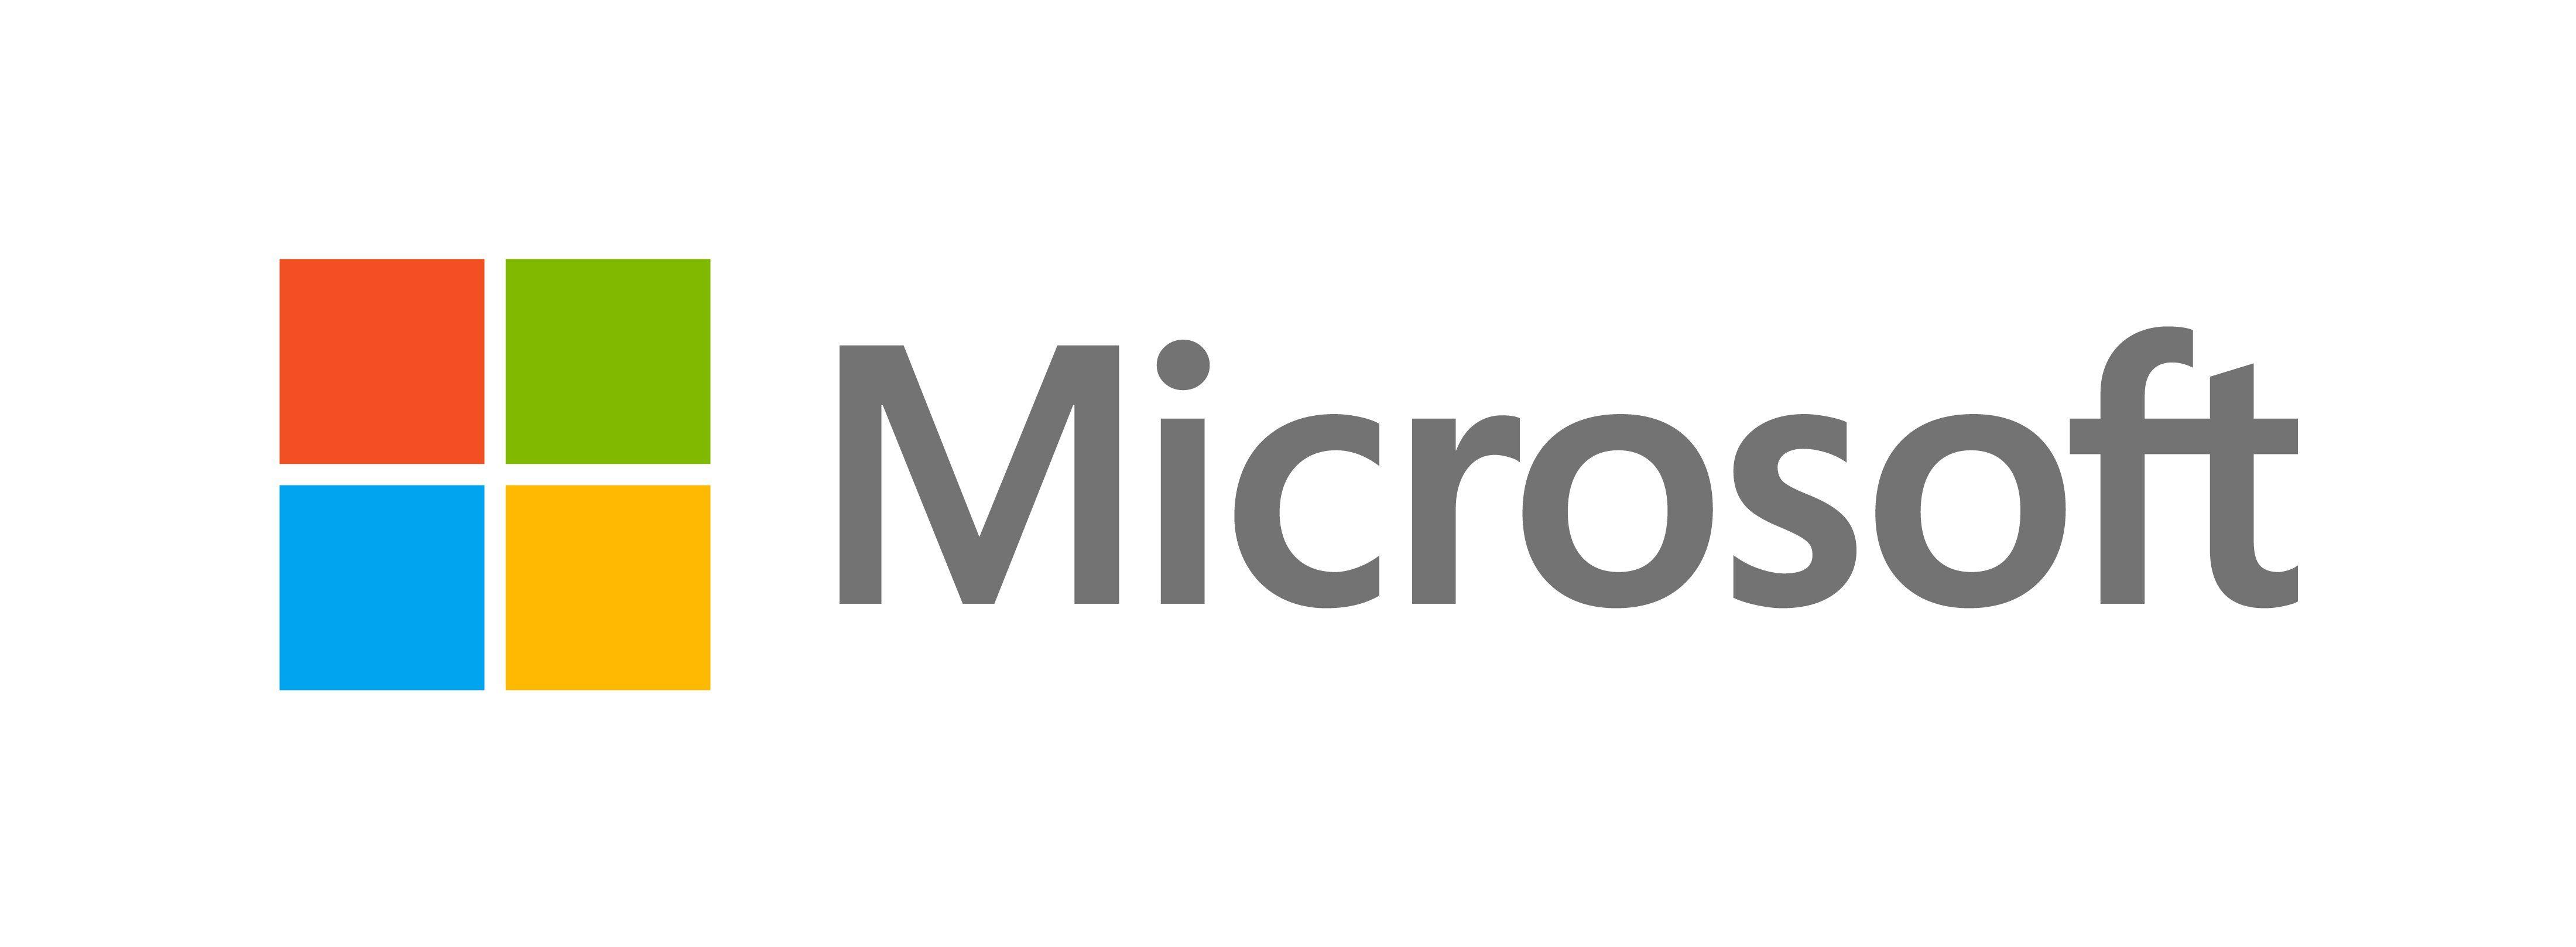 Windows Surface Logo - Microsoft logo 2017 | art draw | Microsoft, Software, Technology